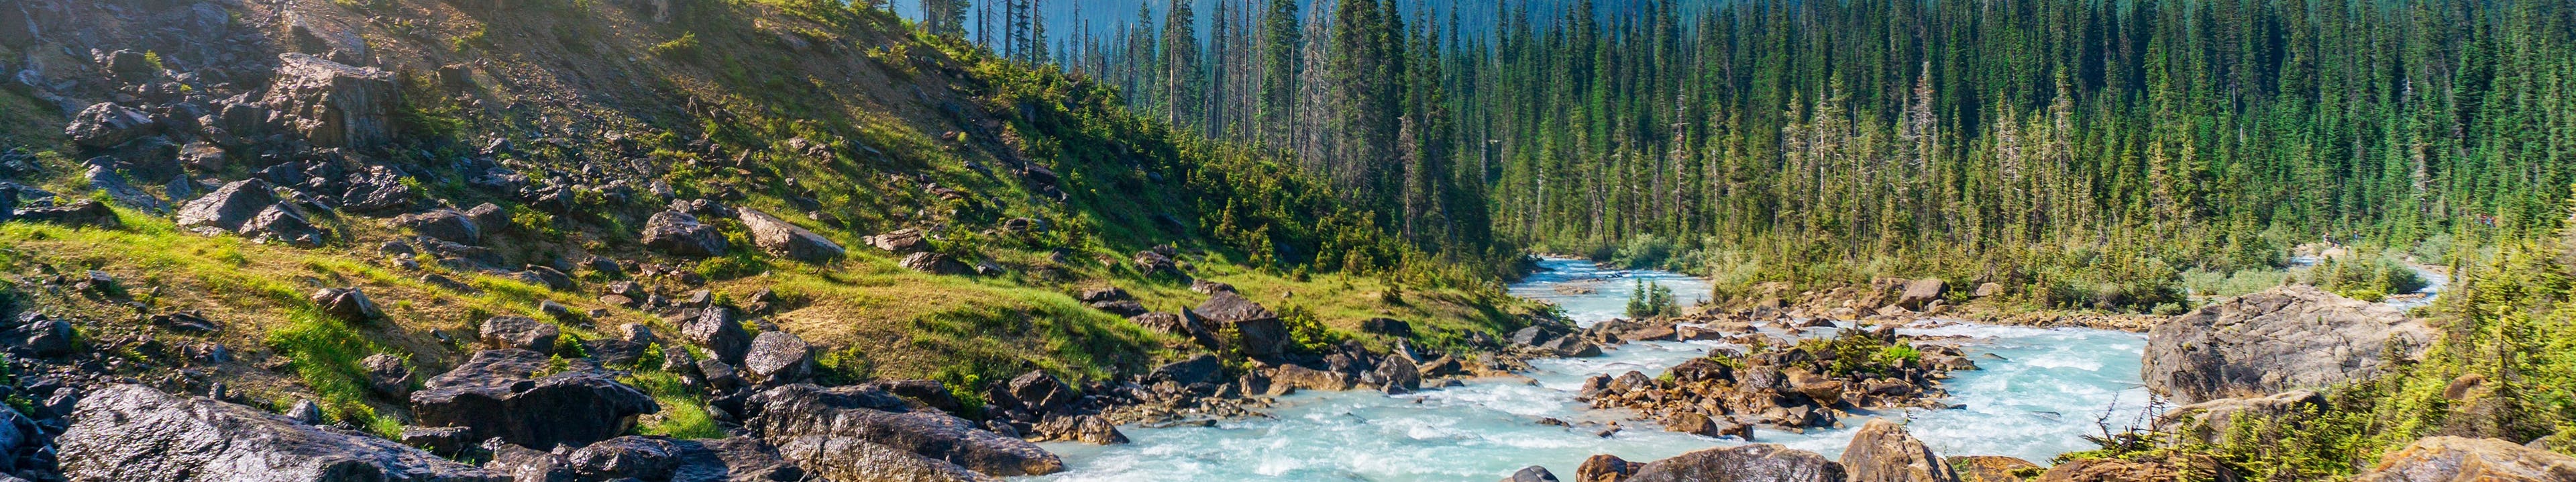 Alberta Mountain River